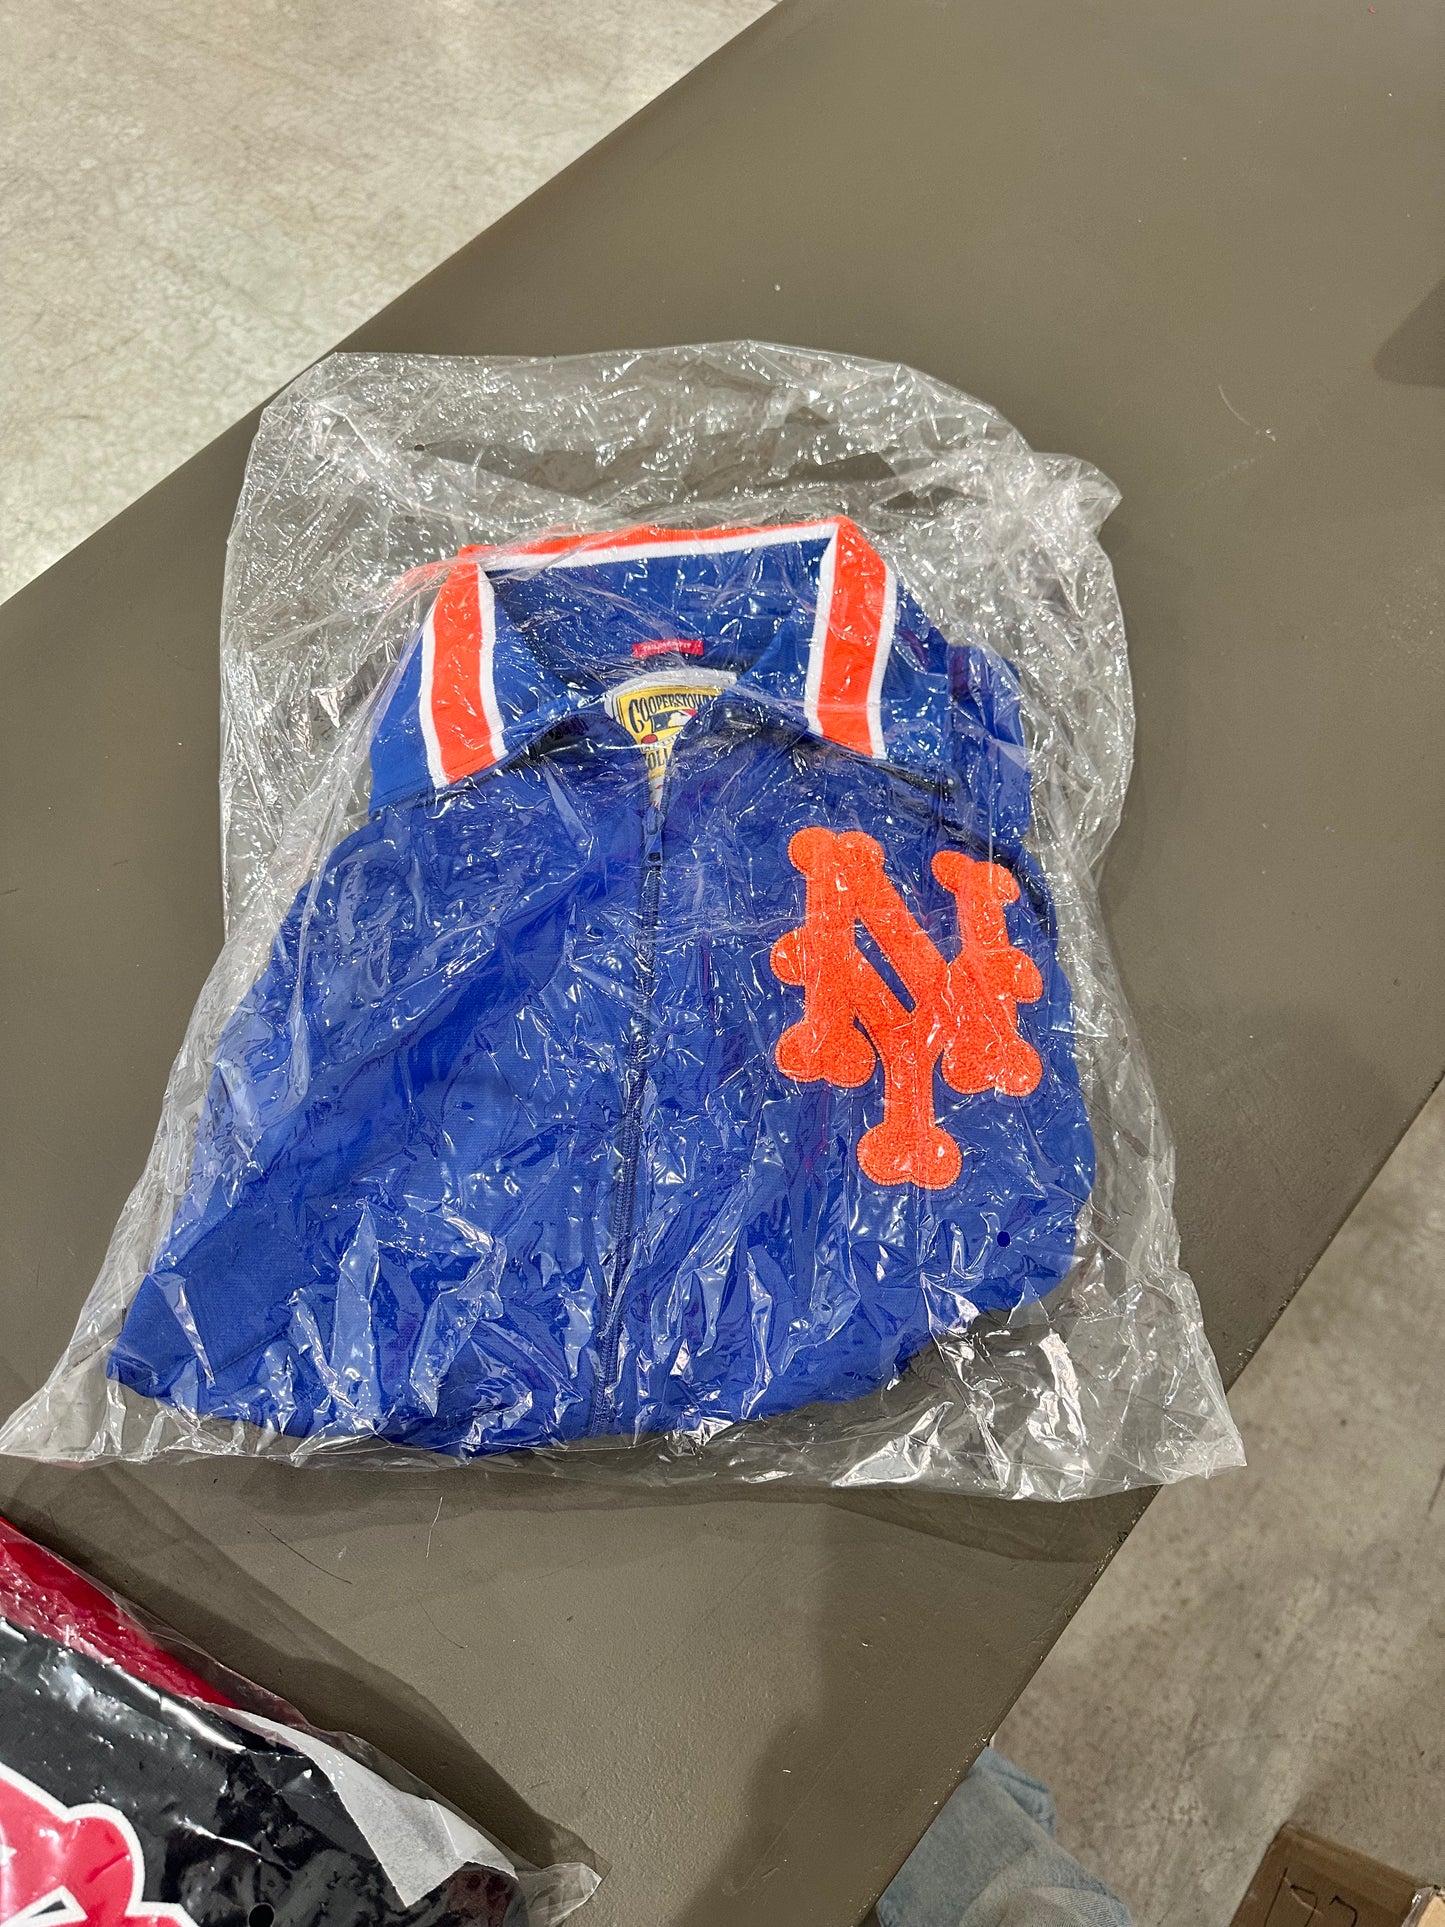 Mets track jacket